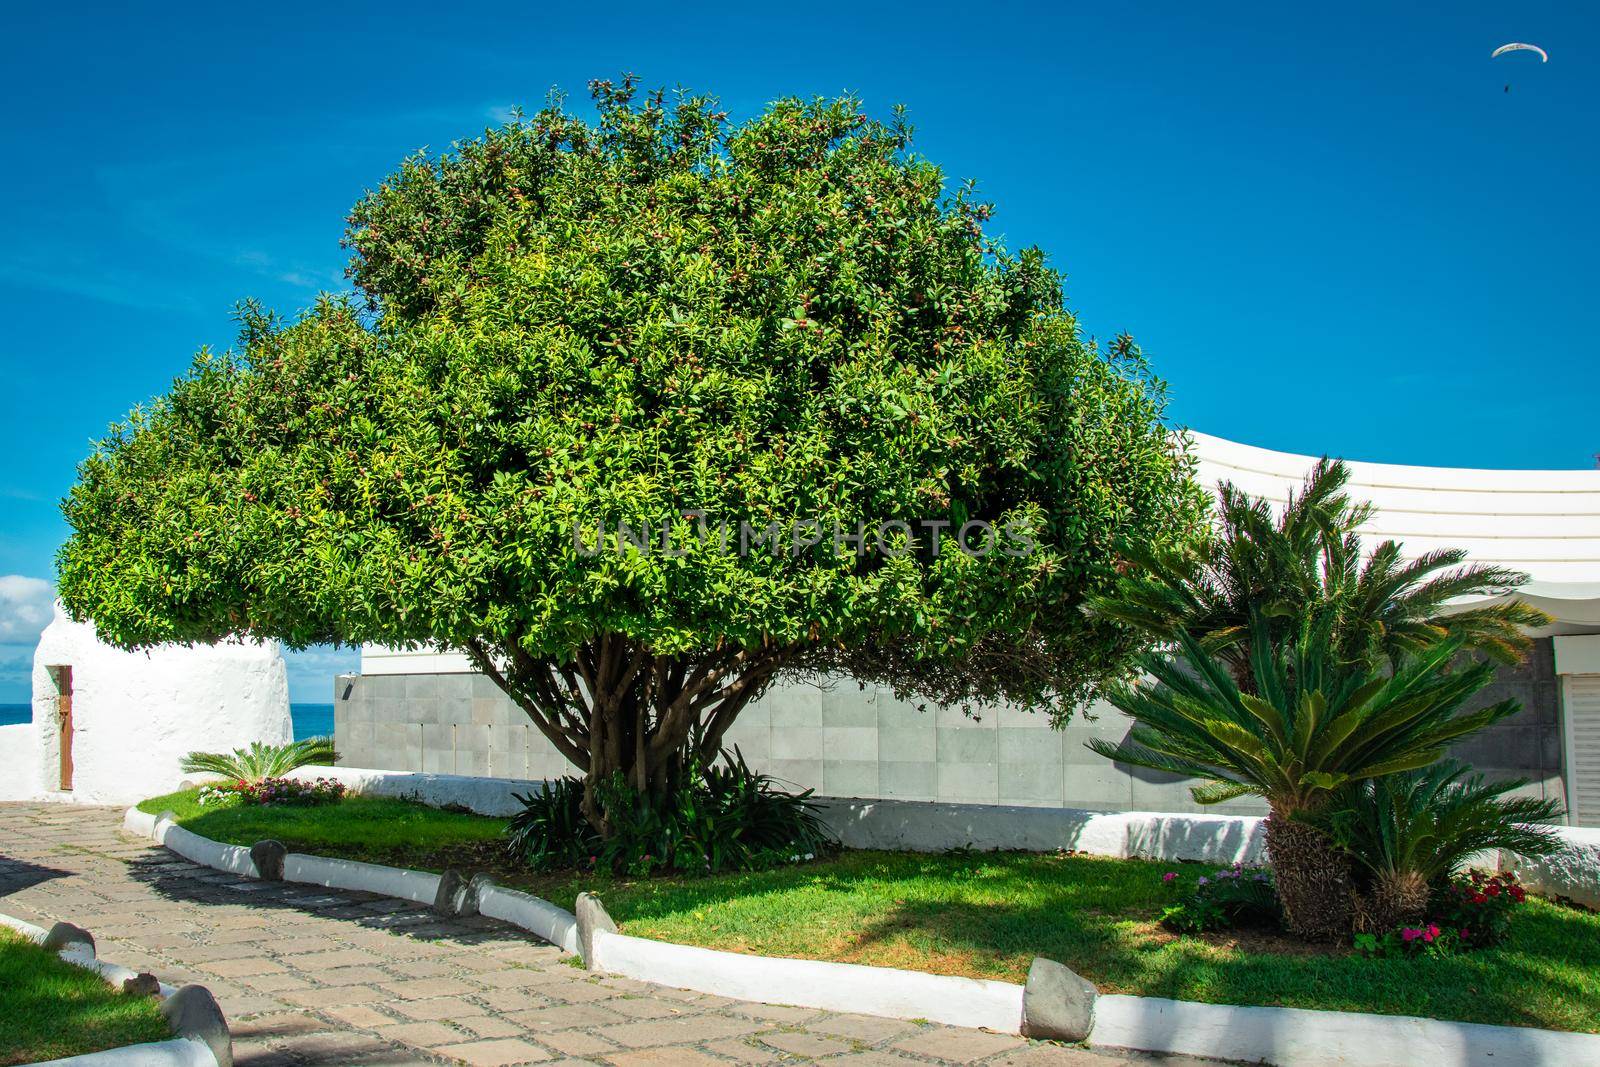 Beautiful shot of a Waxleaf Ligustrum tree near a path, Puerto de la Cruz, Tenerife, Spain